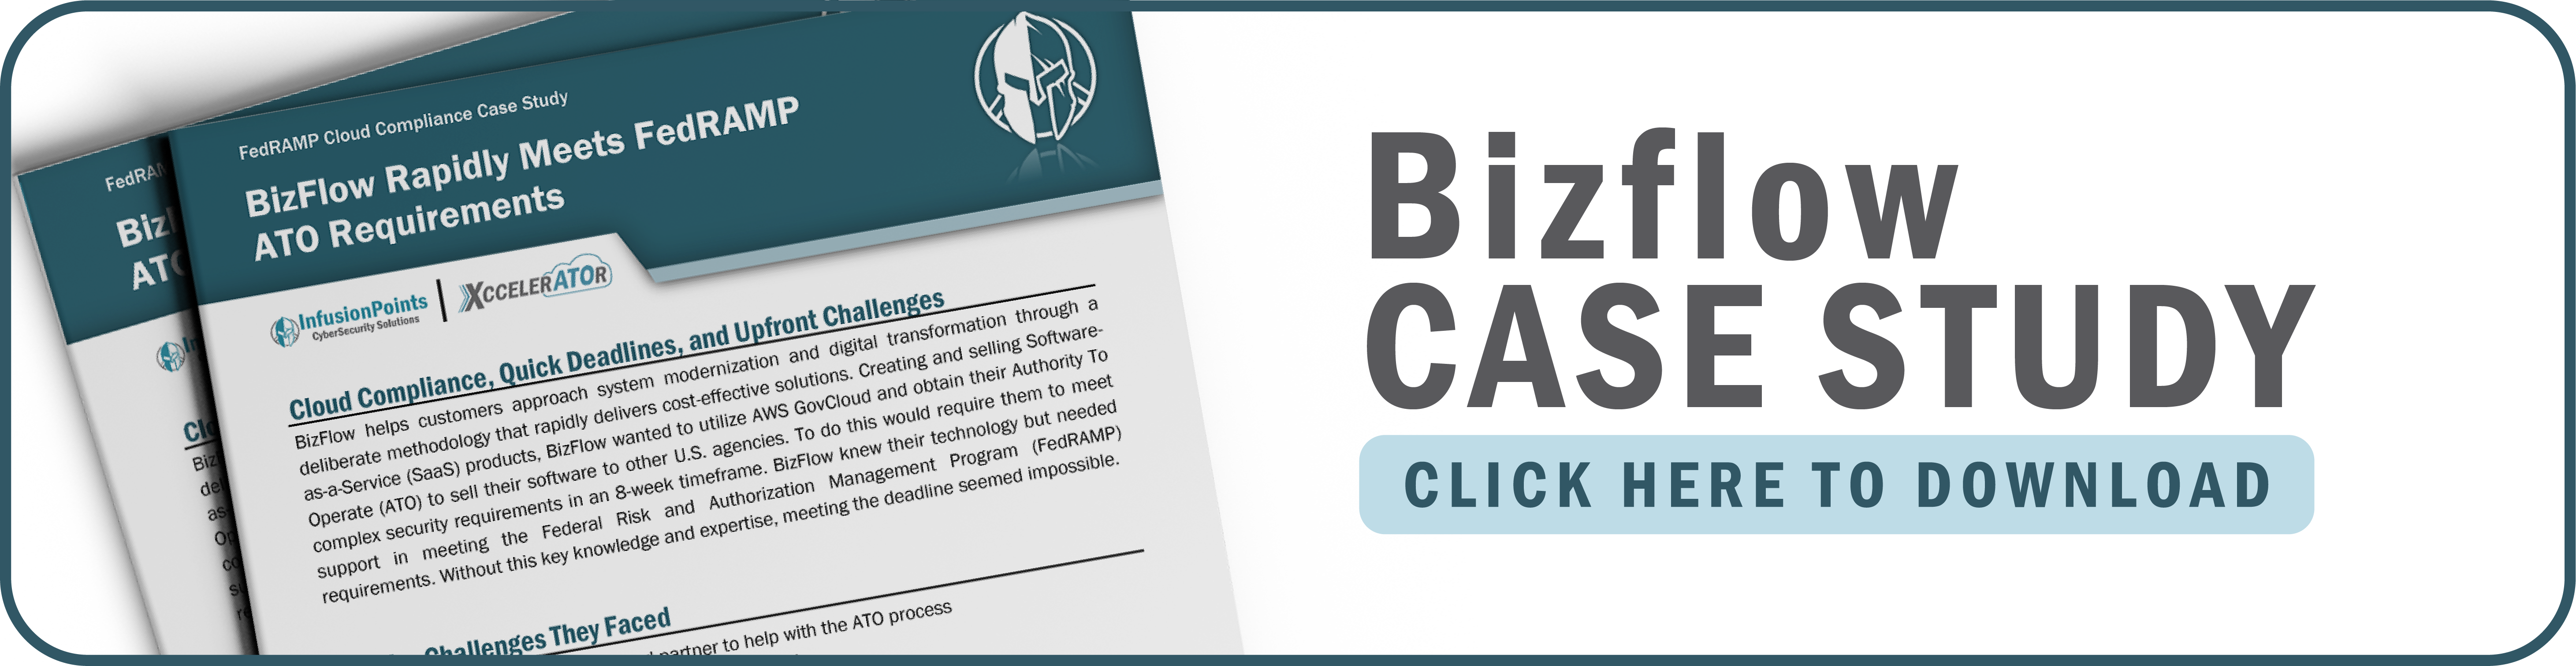 Bizflow Case Study Download